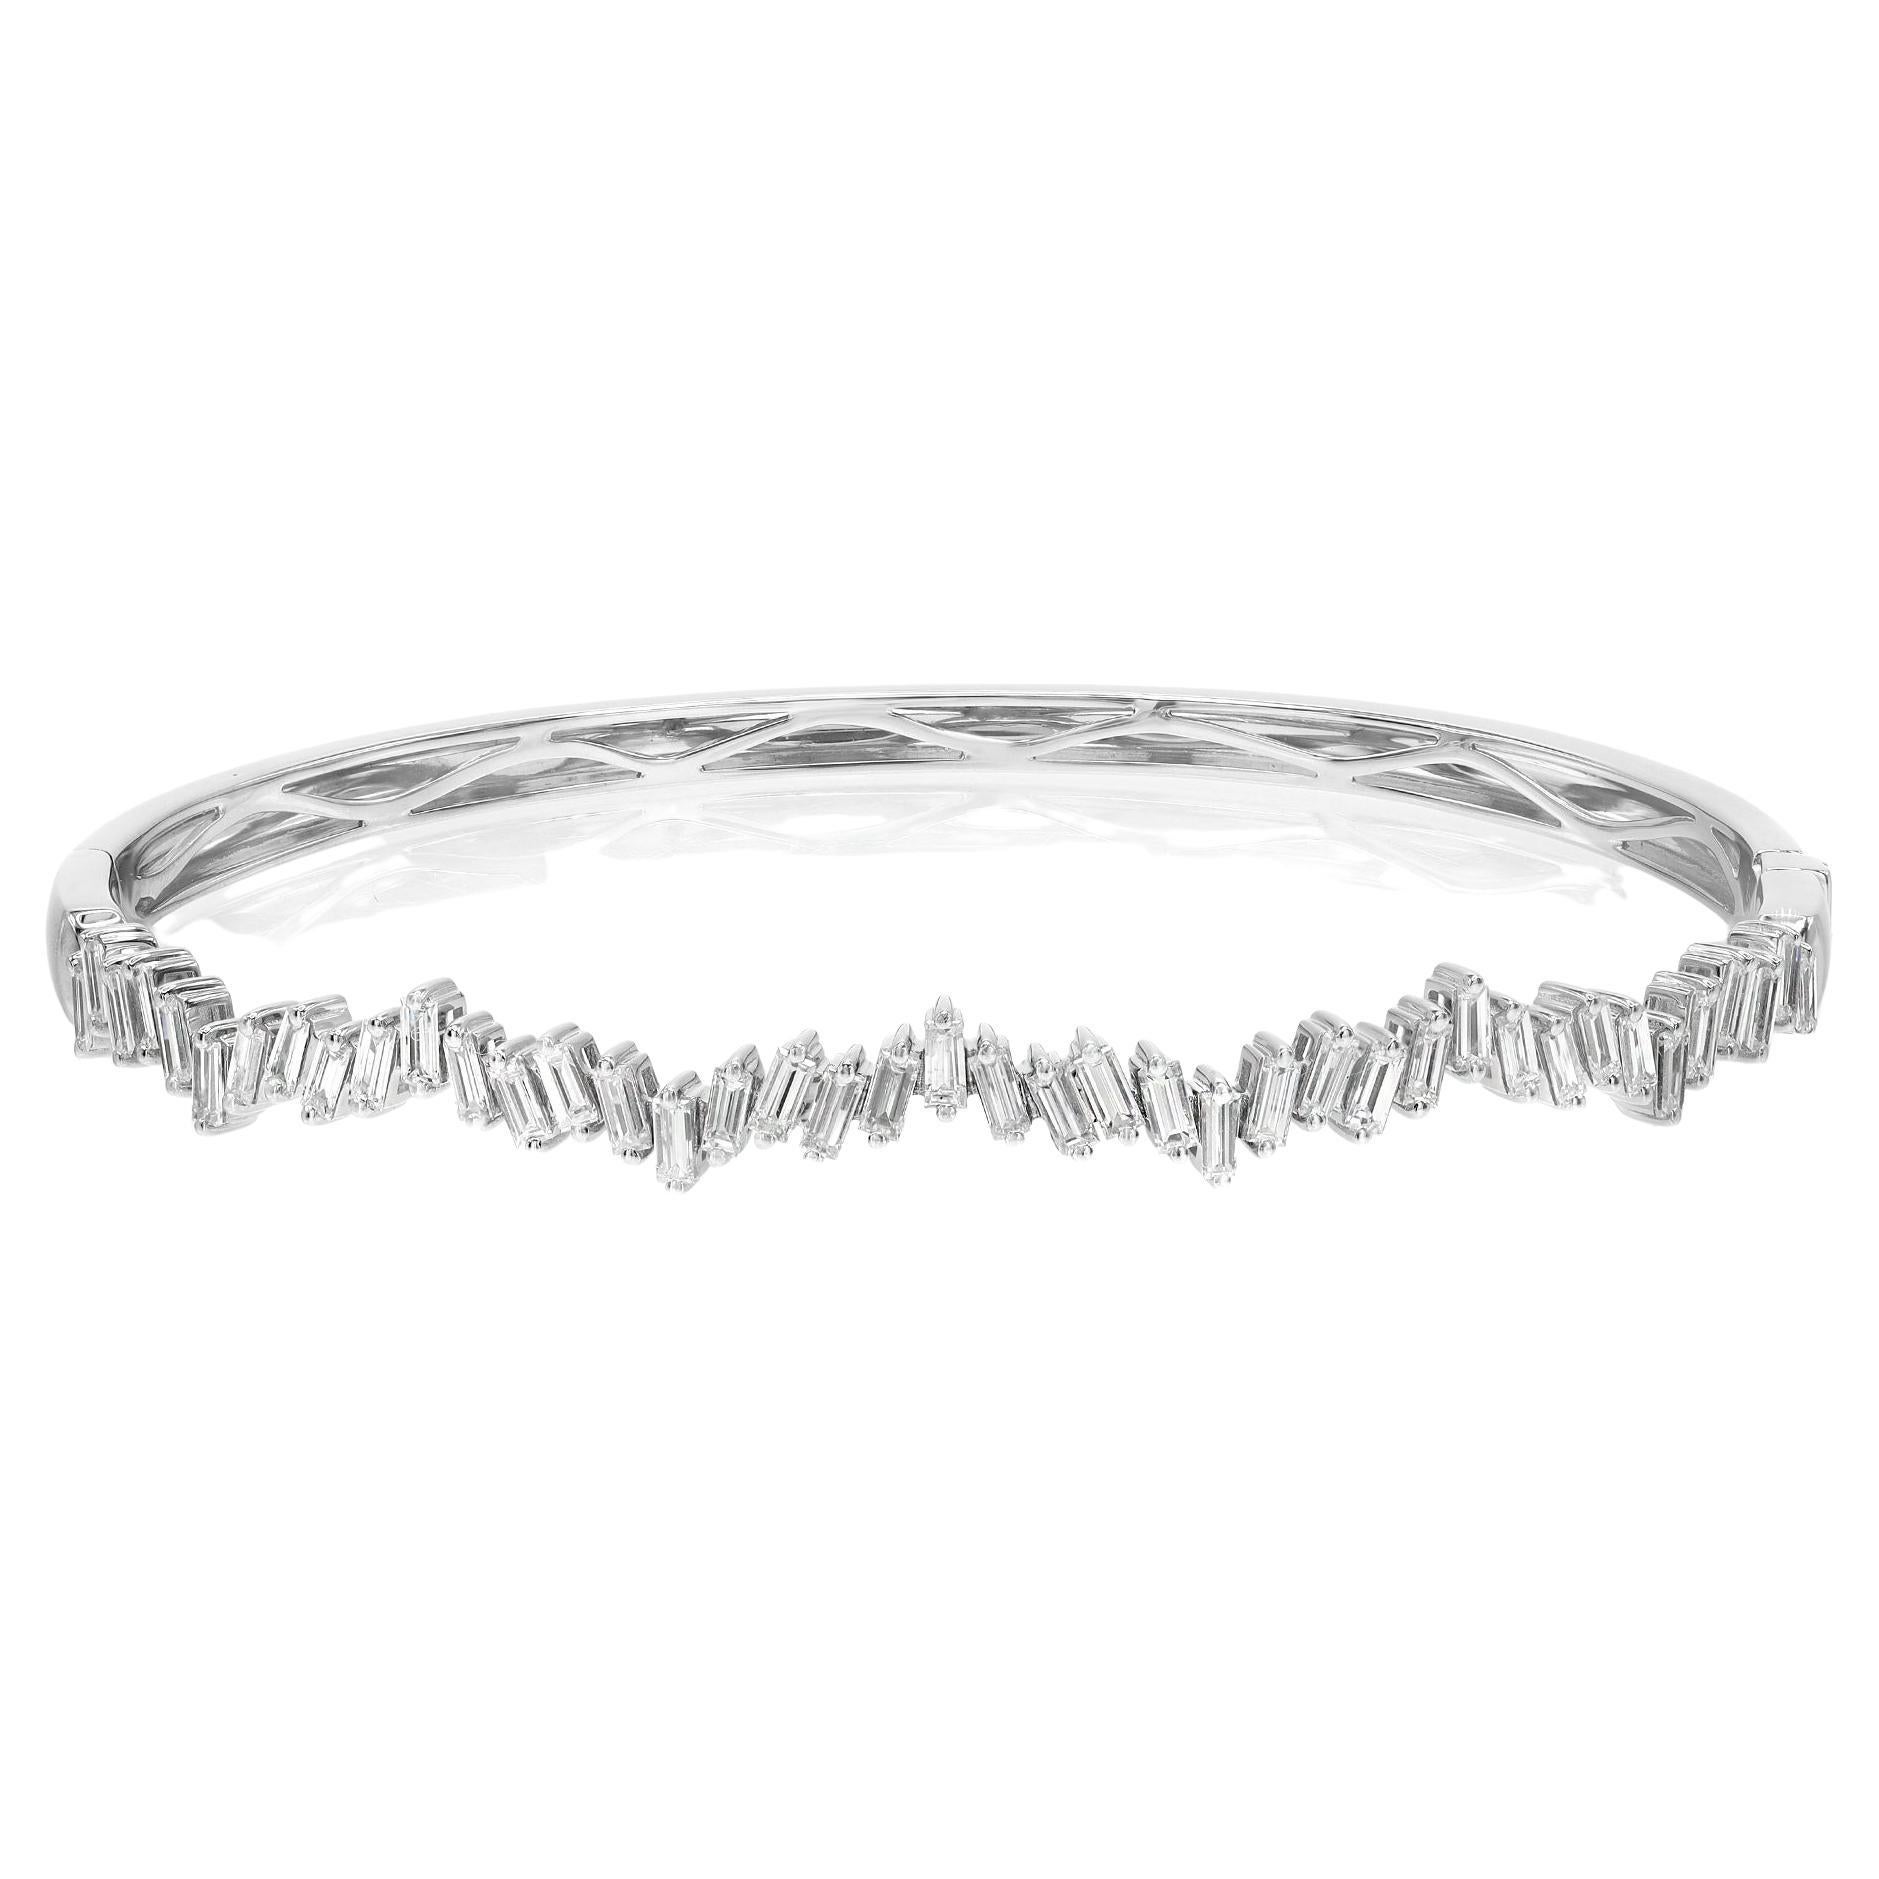 Rachel Koen Baguette Cut Diamond Bangle Bracelet 18K White Gold 1.57Cttw For Sale